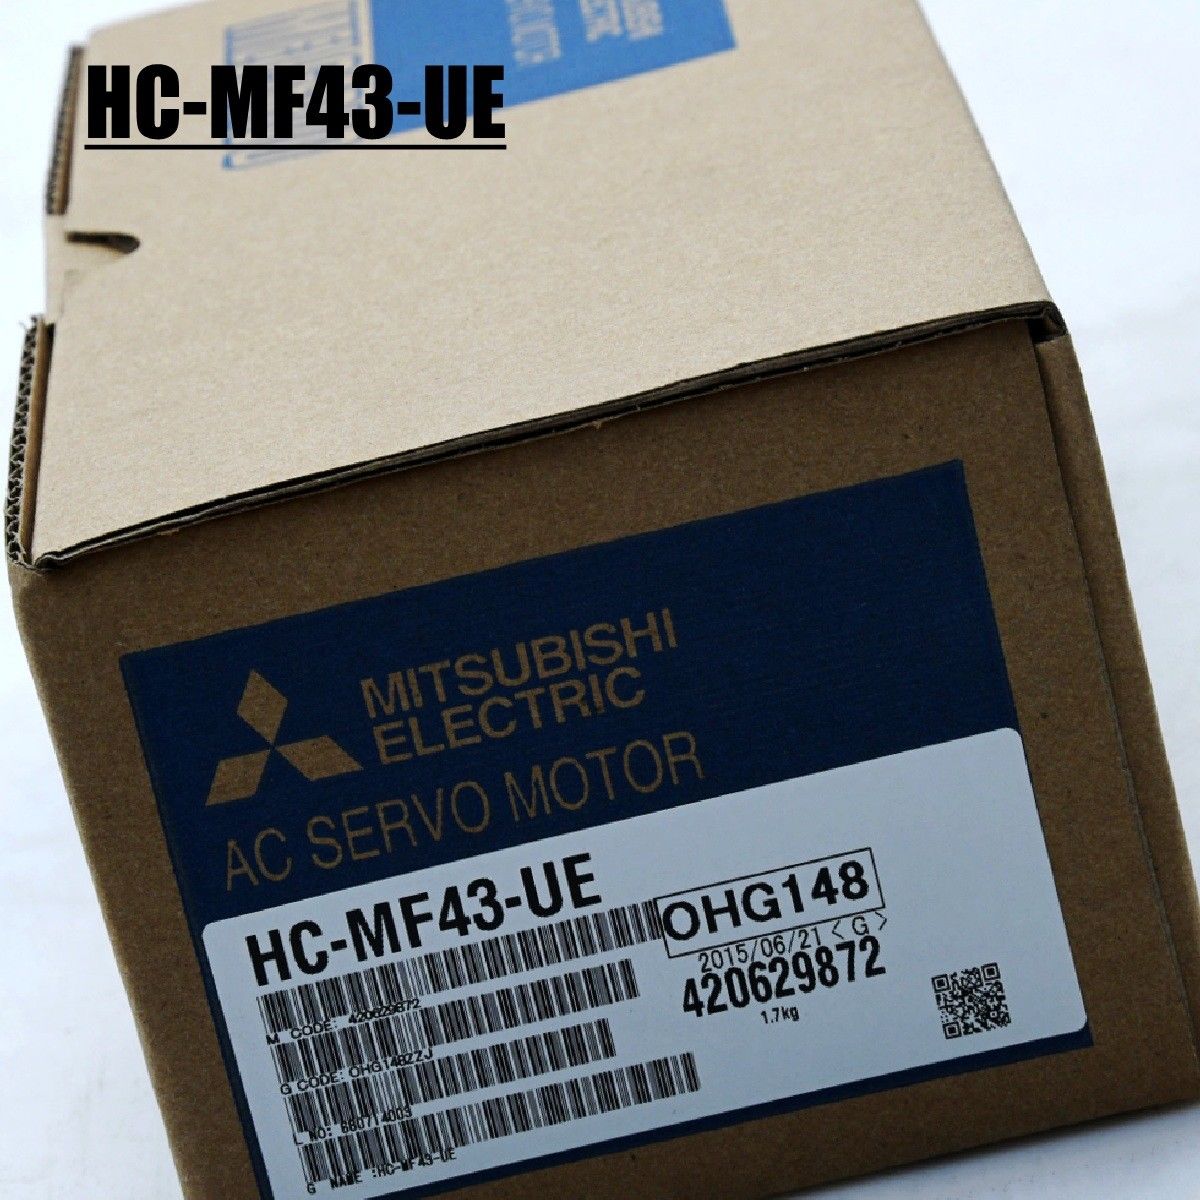 Original New Mitsubishi Servo Motor HC-MF43-UE IN BOX HCMF43UE